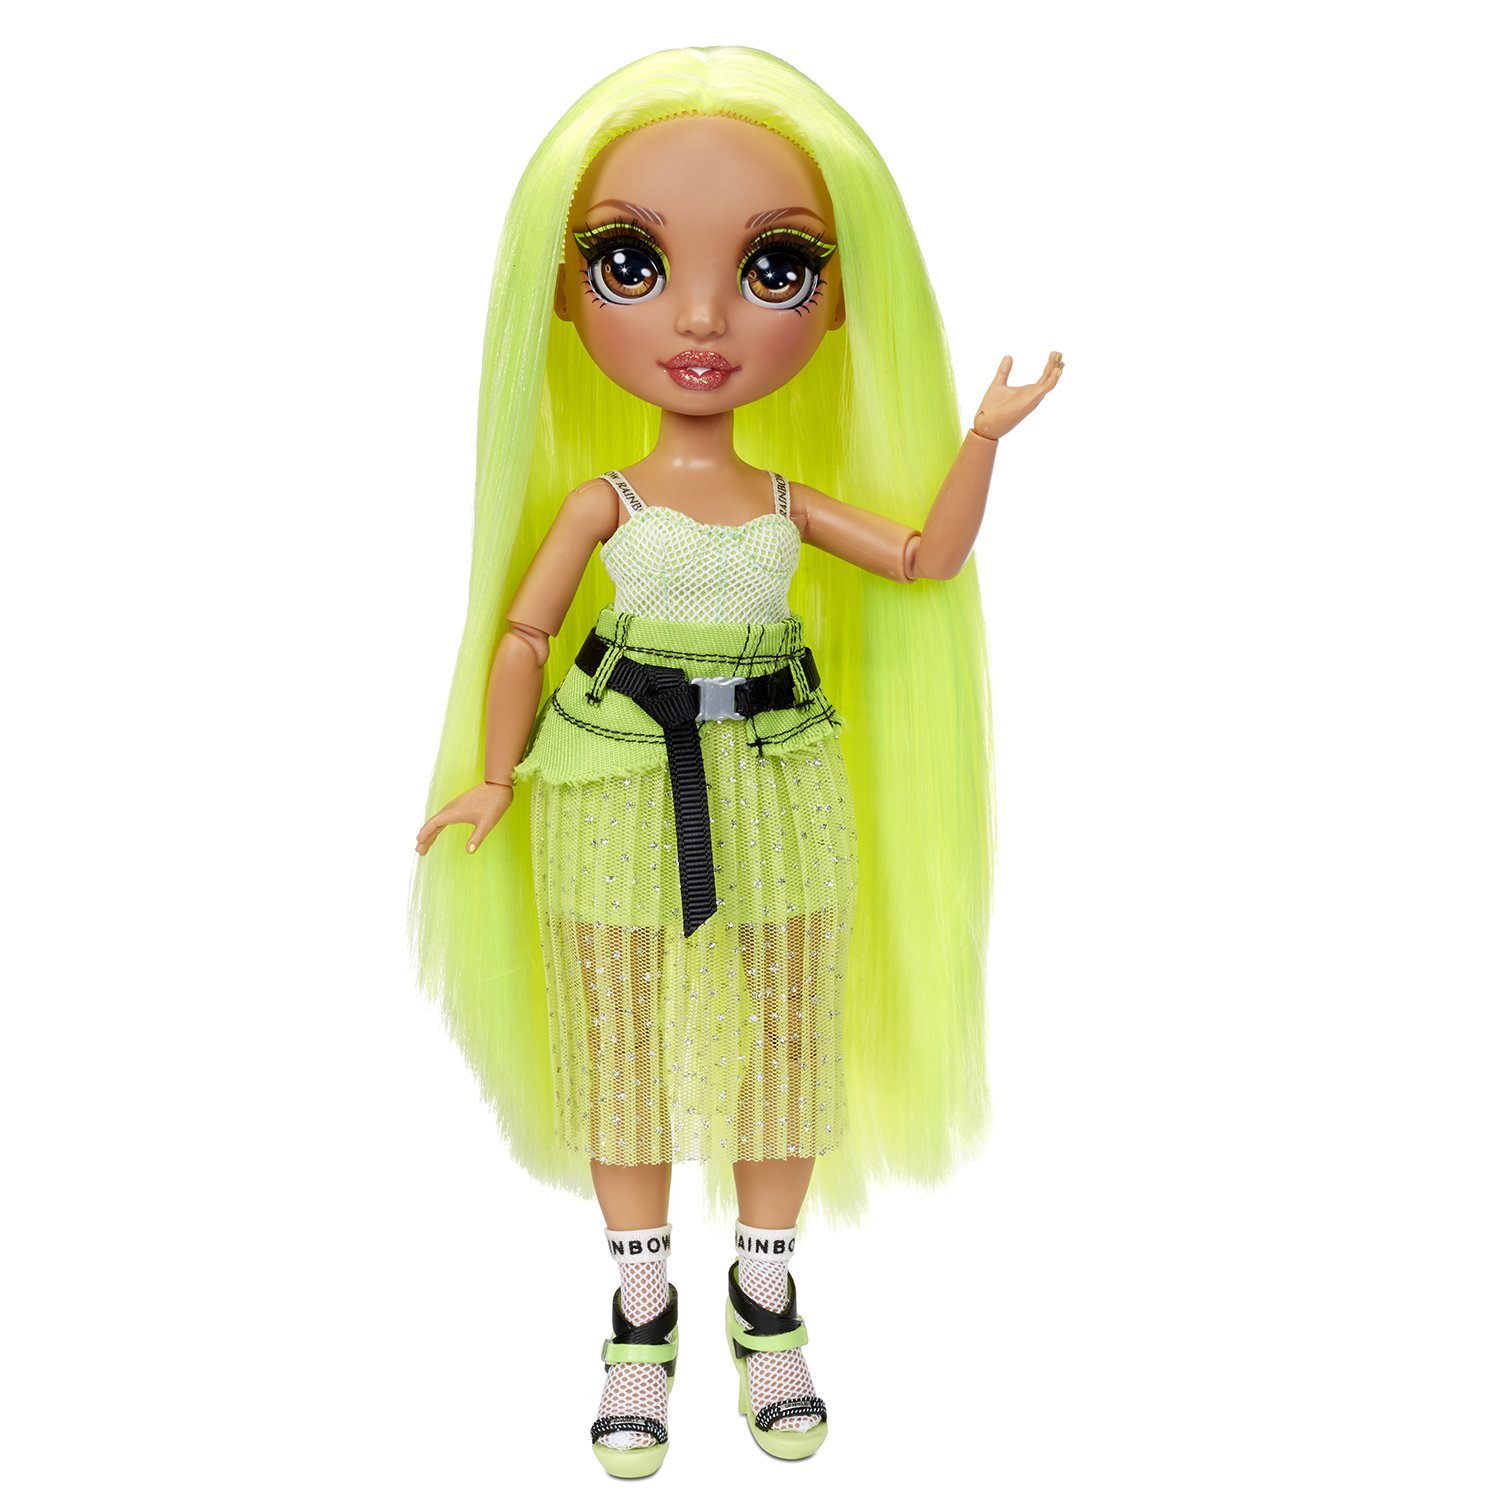 Кукла Rainbow High Fashion Карма Никольс 572343